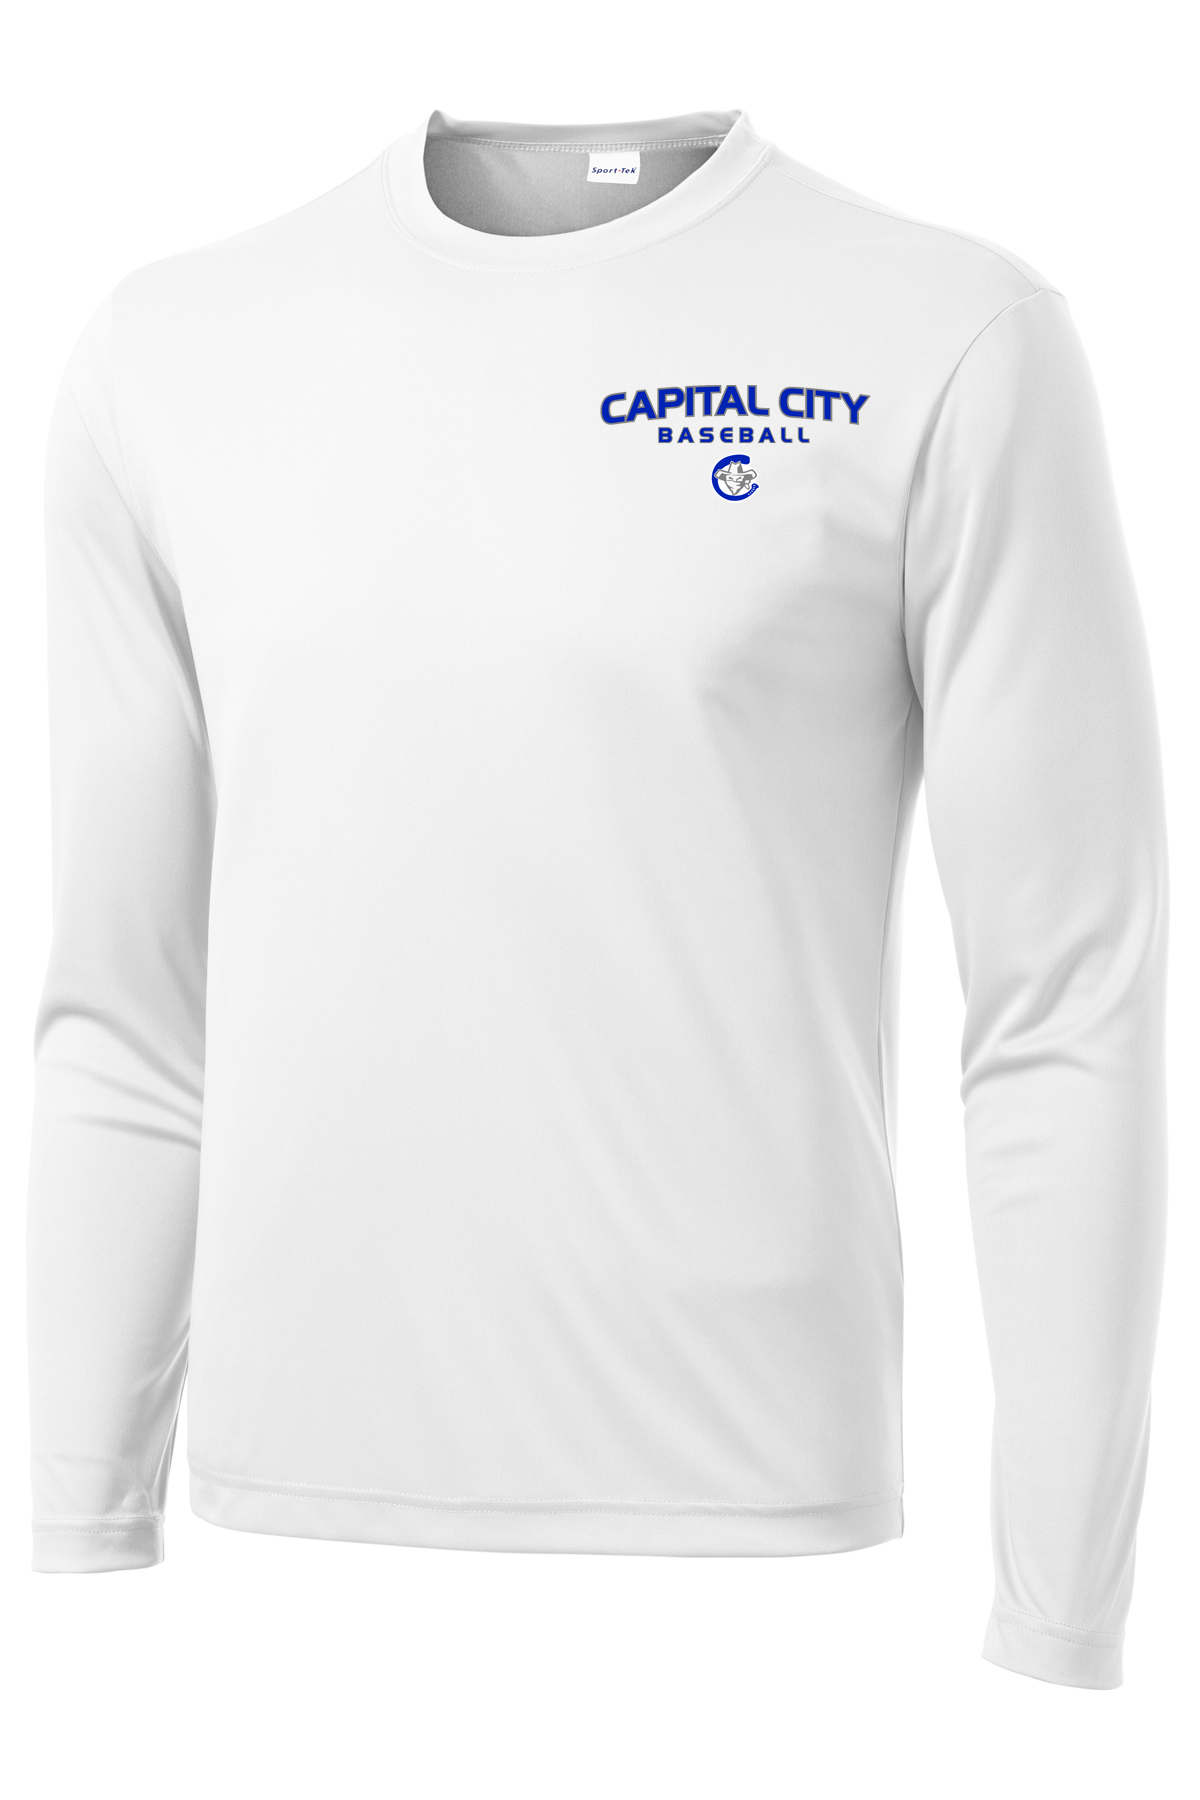 Capital City Baseball Long Sleeve Performance Shirt